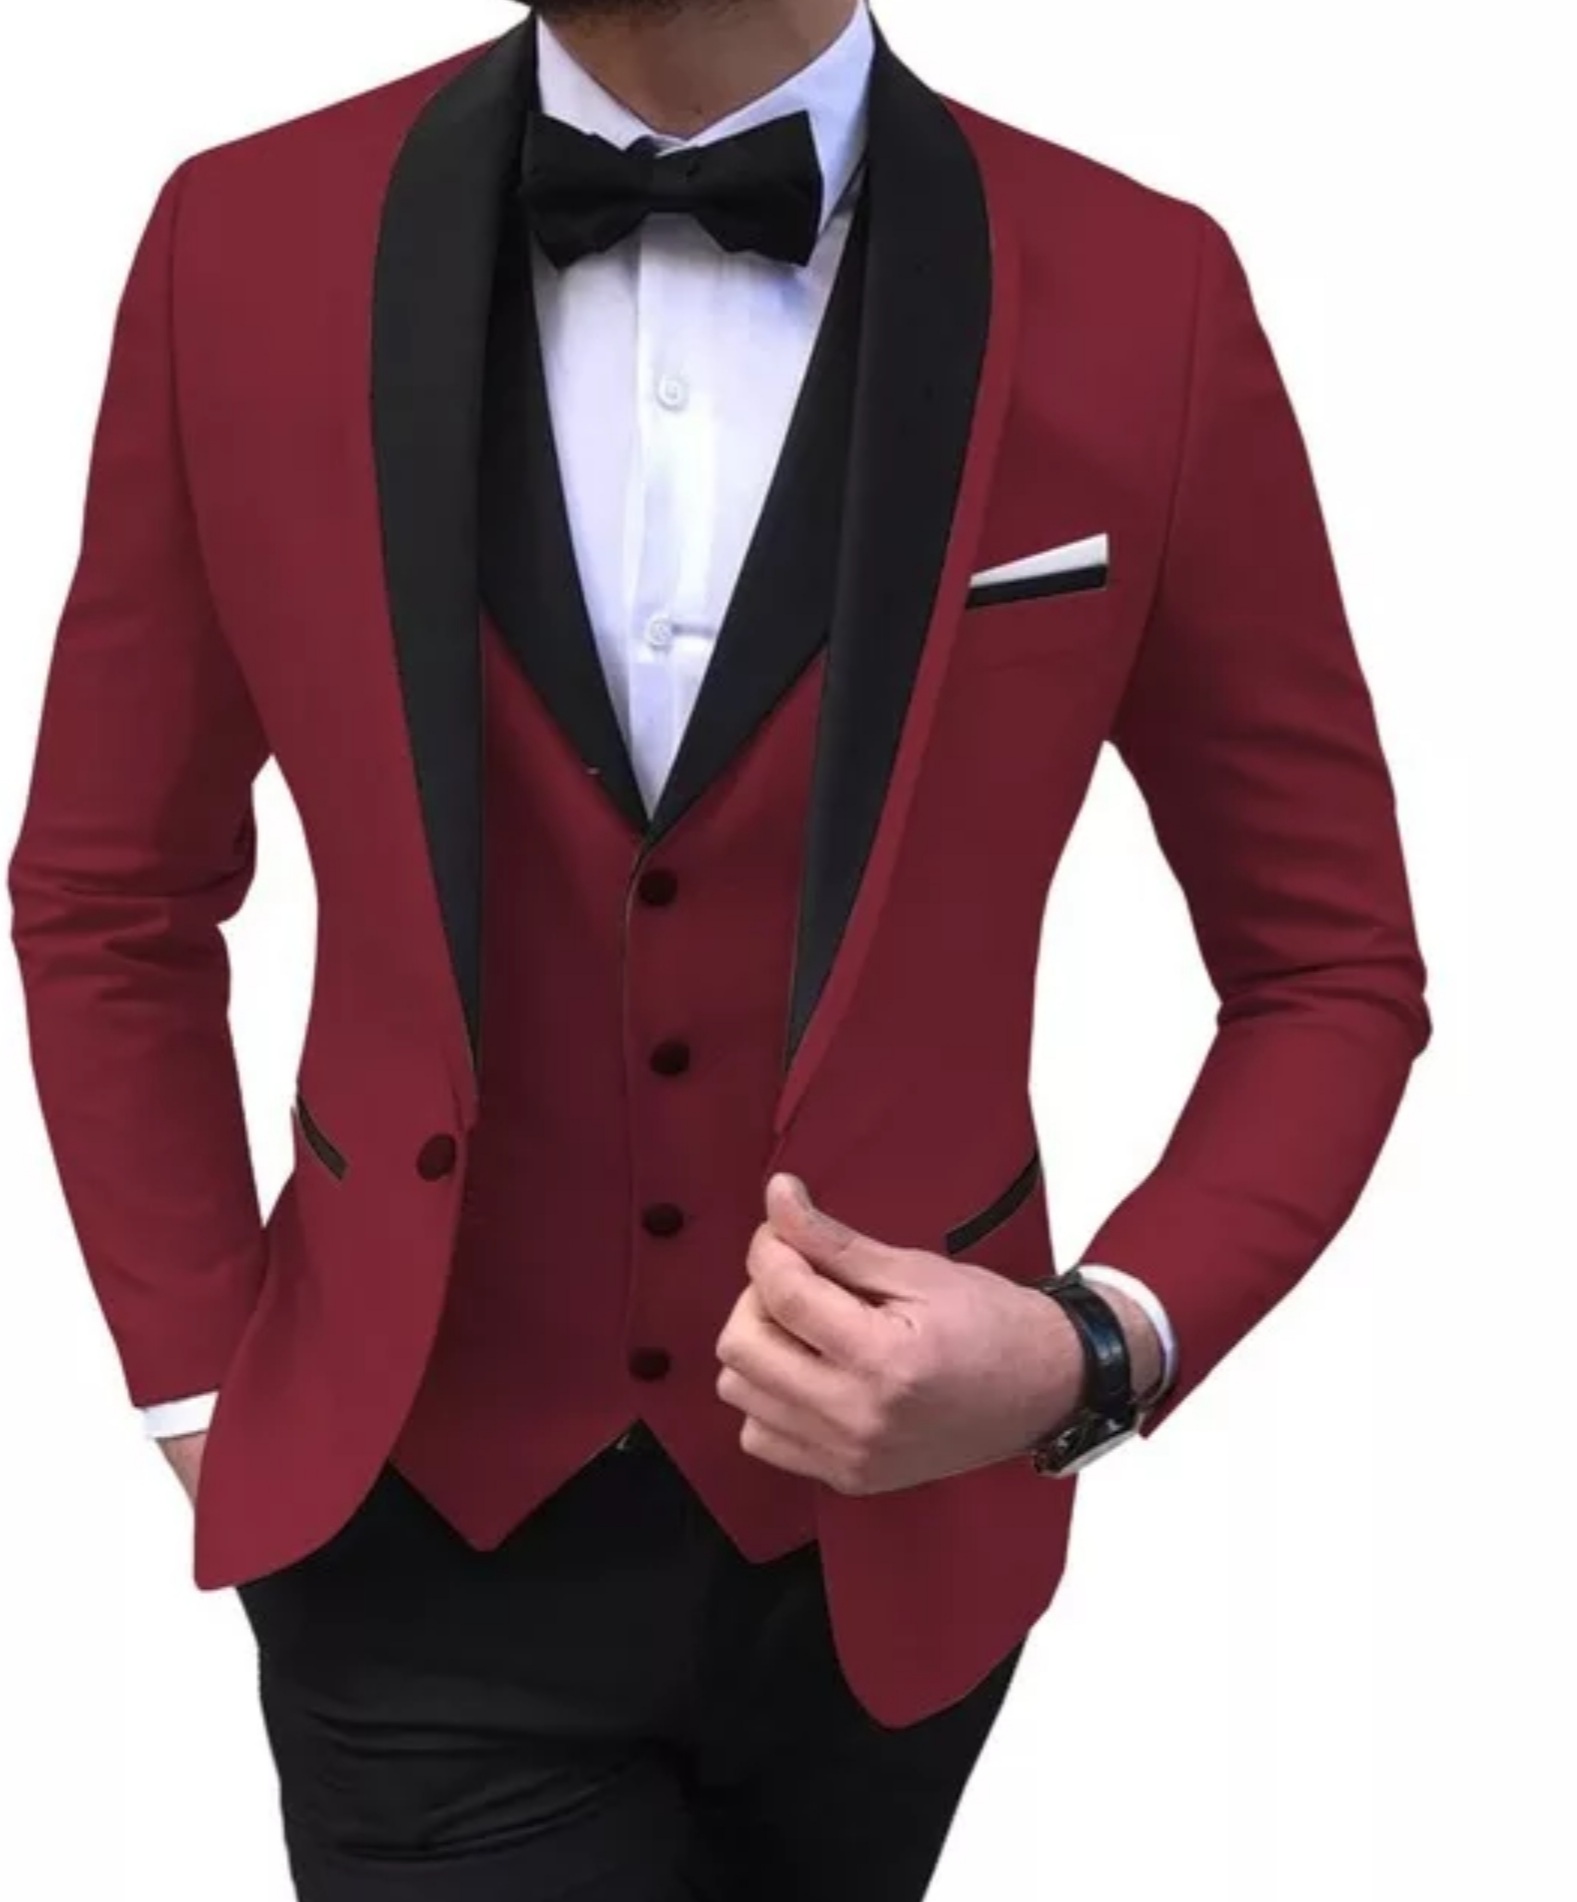 my-singapore-tailor-suits-rent-rental-hire_suit-shop-singapore-black-tie-wedding-tuxedo-bespoke-tailoring-tailors-tailor-090